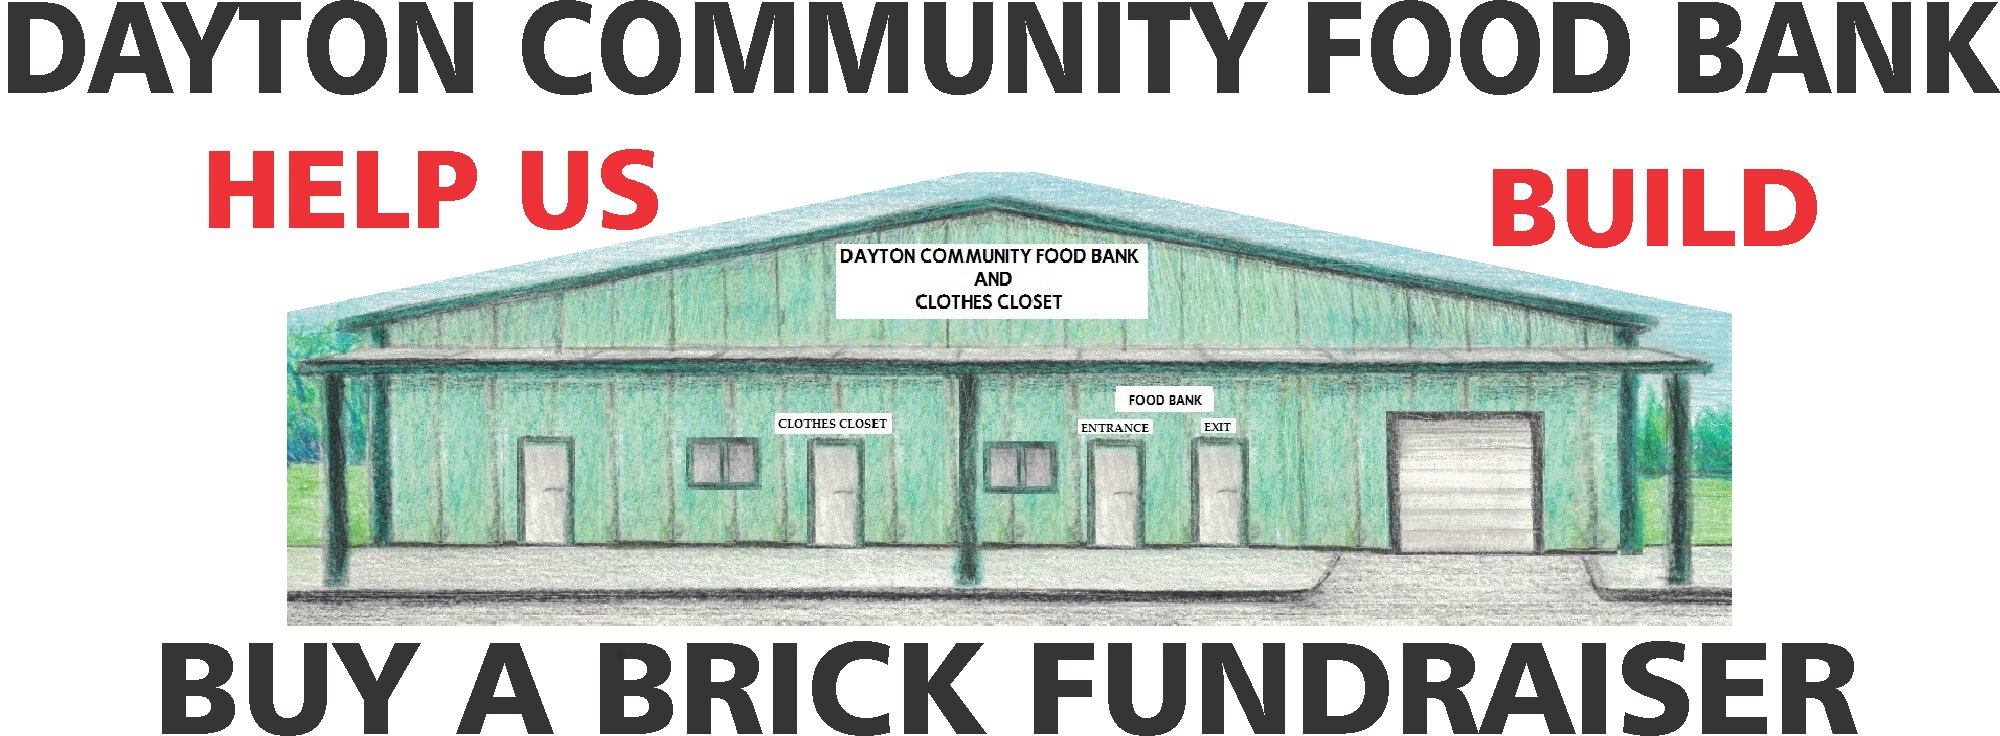 Dayton Community Food Bank Brick Fundraiser